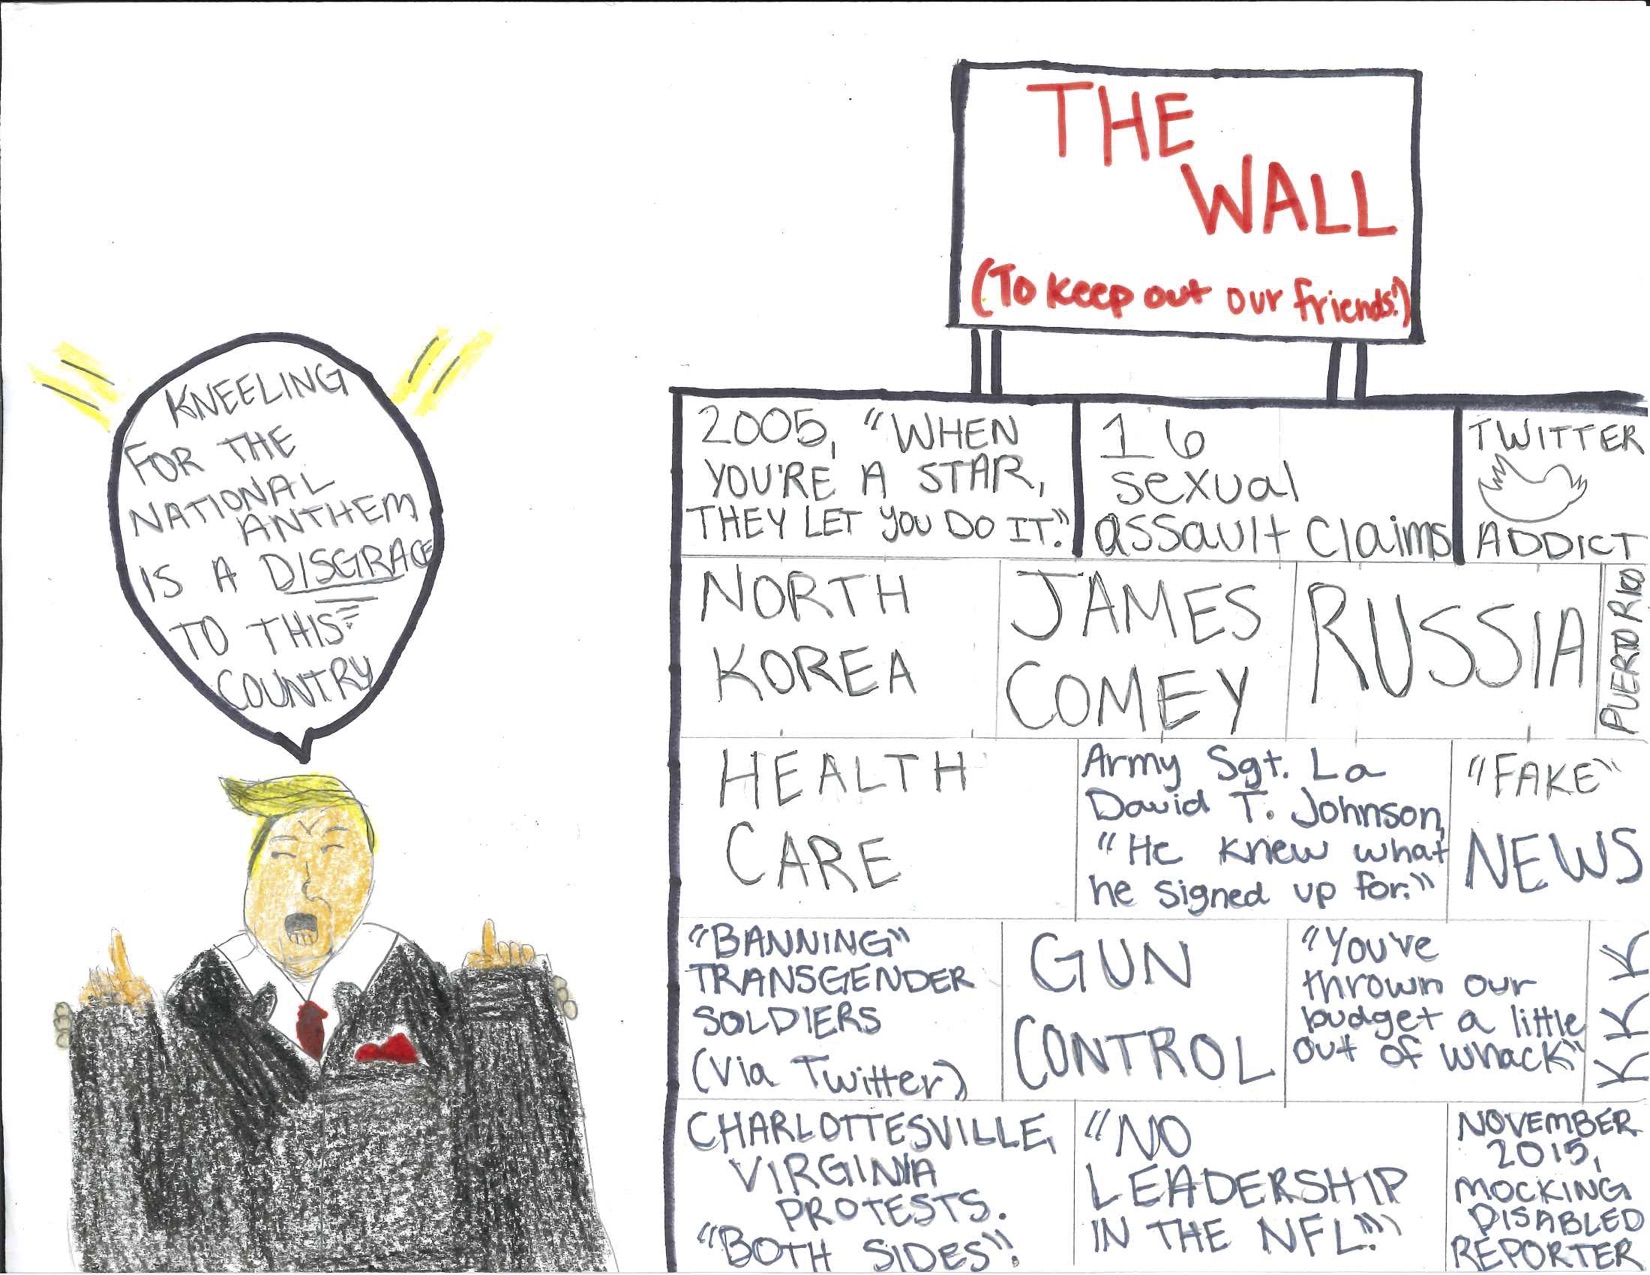 Editorial Cartoon: “The Wall”